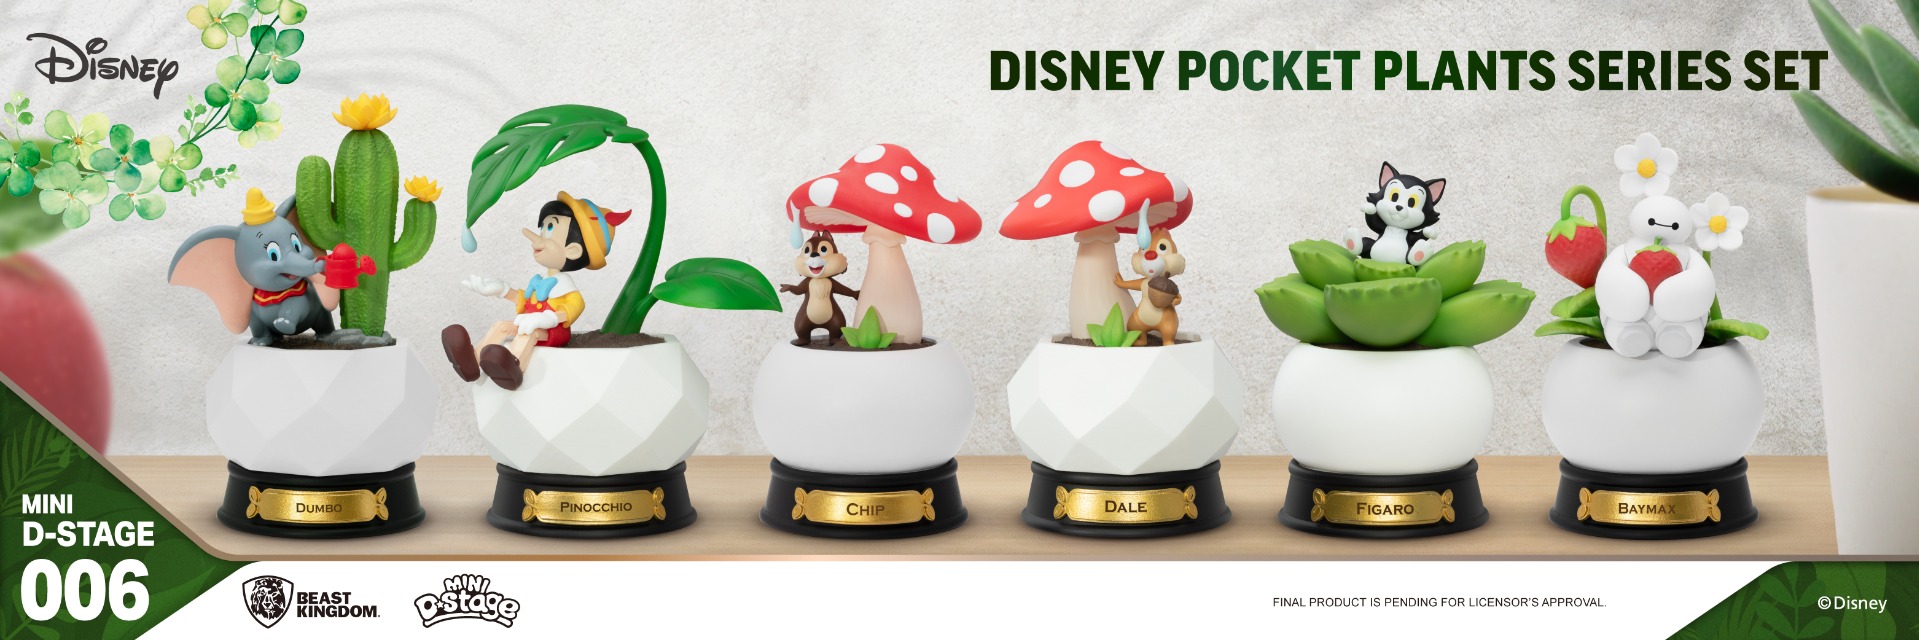 MDS-006-Disney Pocket Plants Series Set, MDS-006SP-Disney Pocket Plants Series-Strawberry Special Edition Set